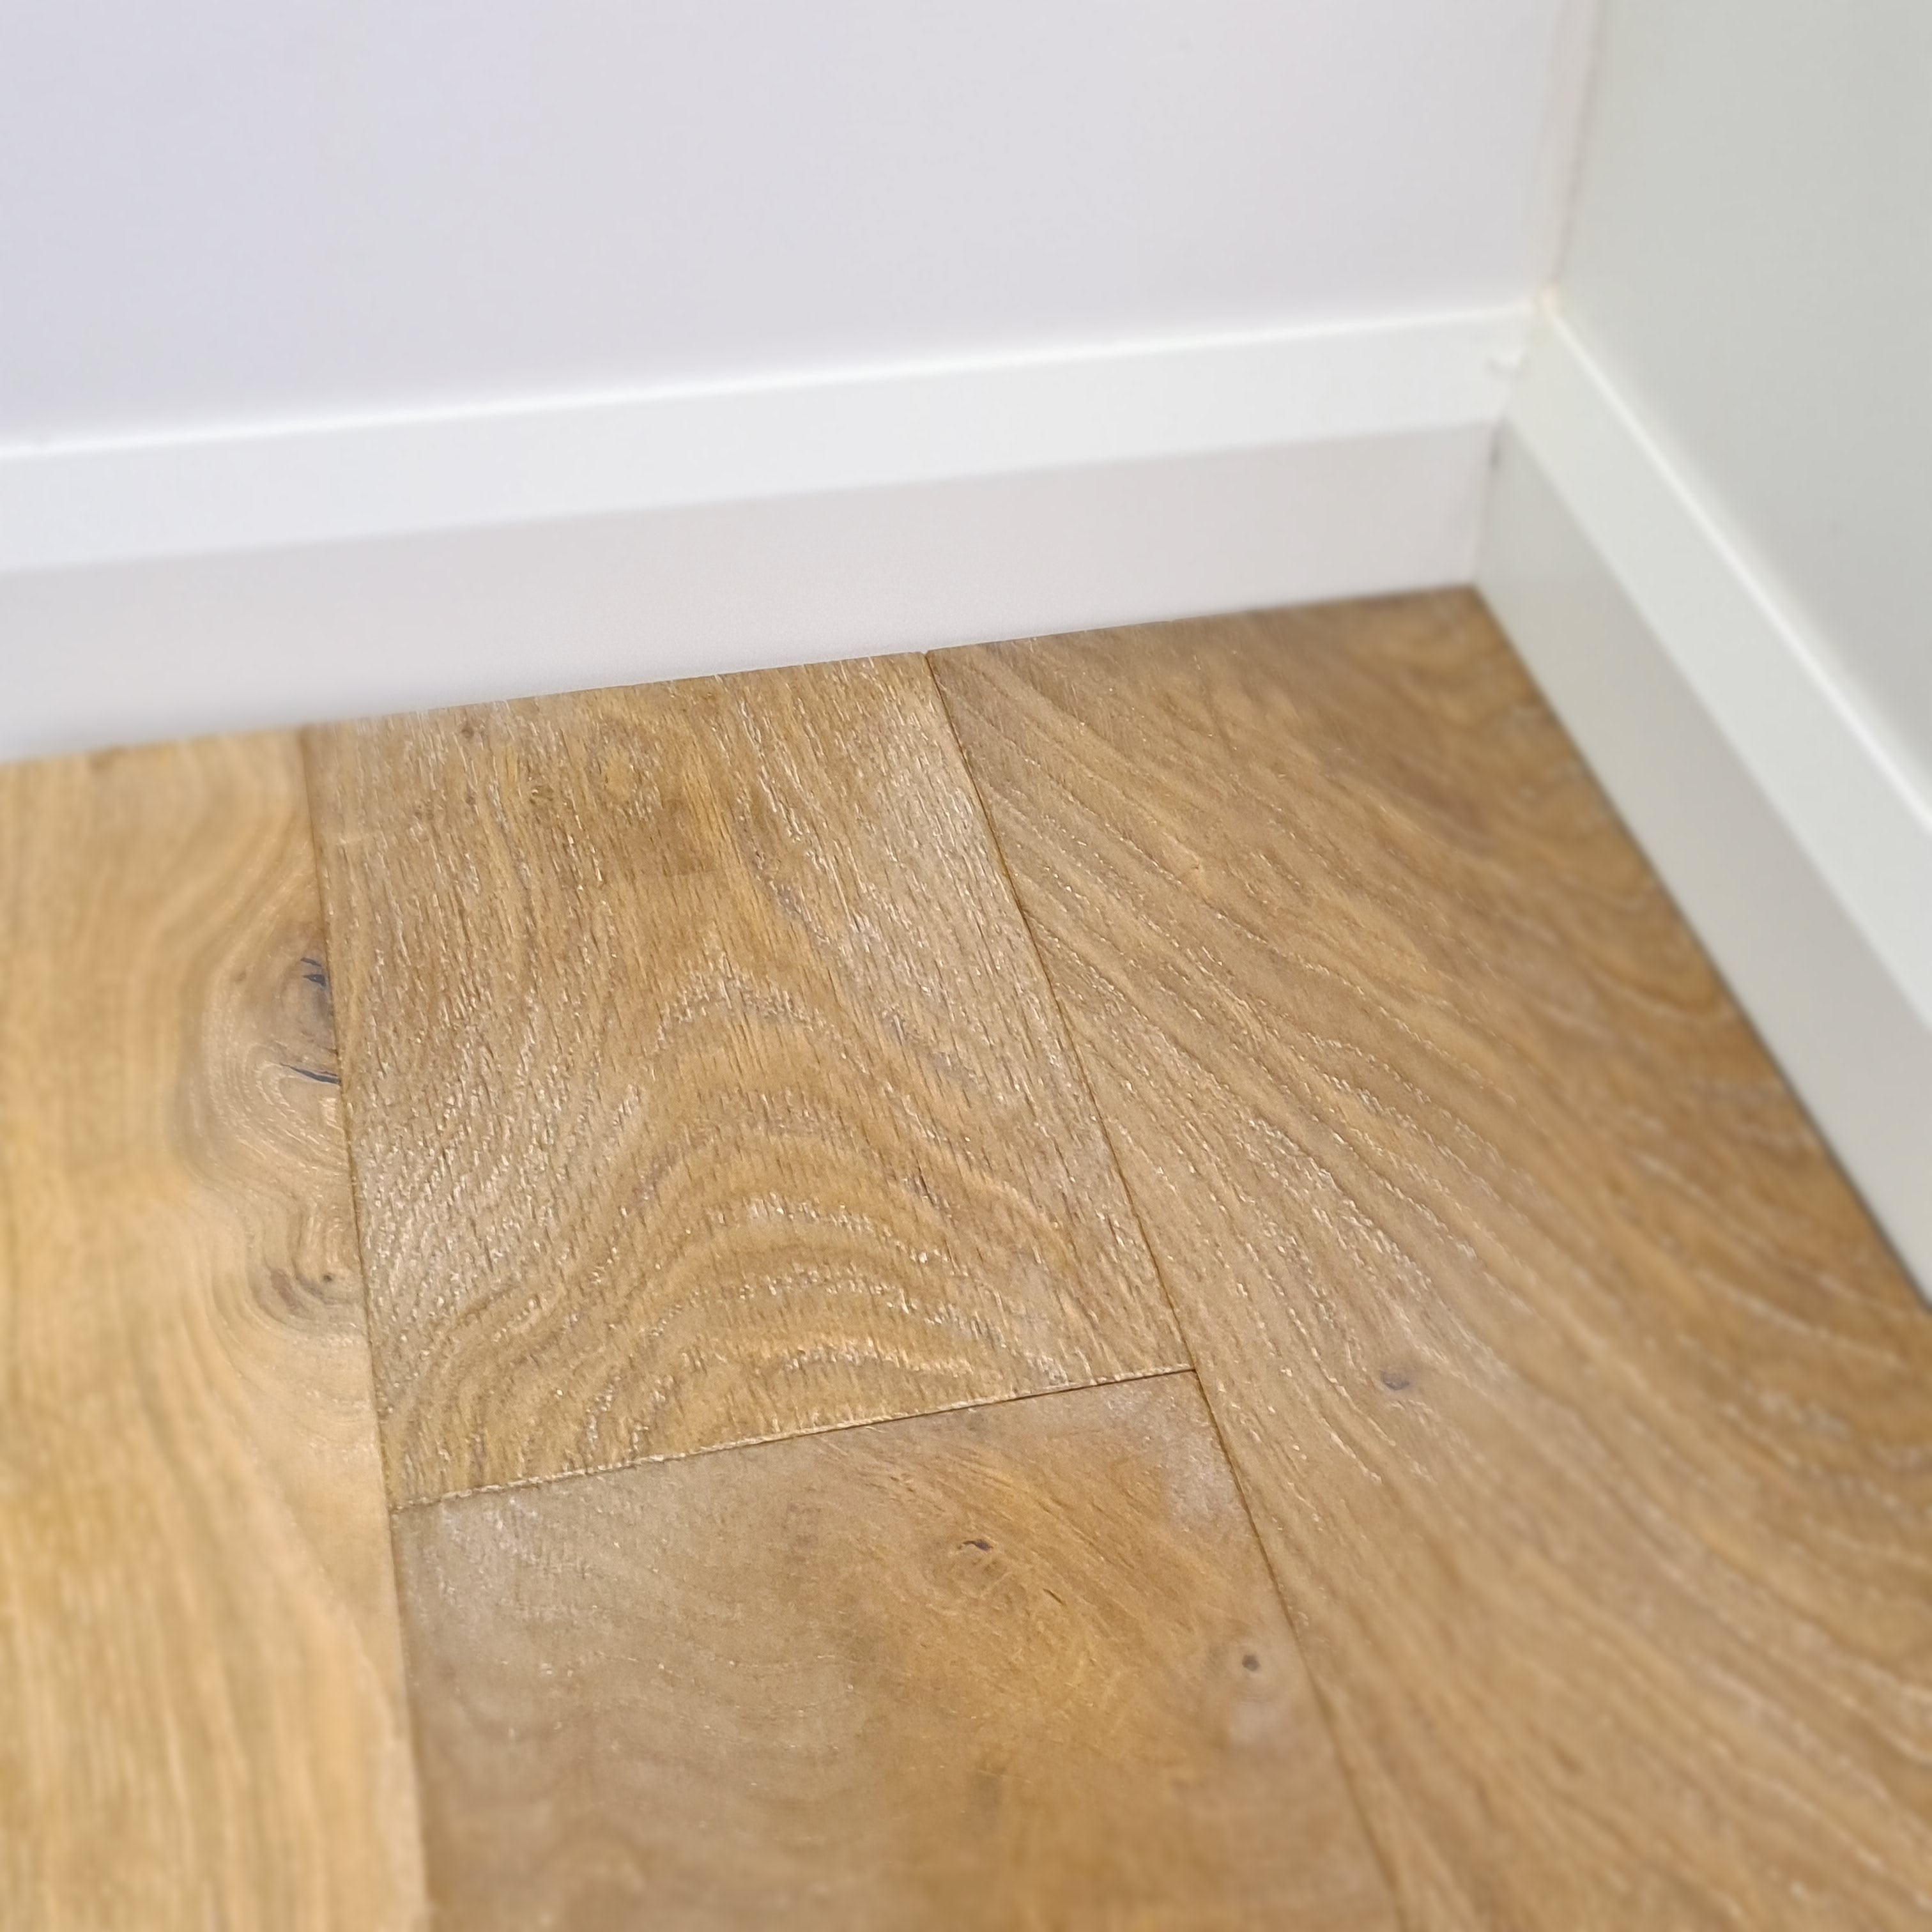 TimberFloor Grey Smoked Oak Brushed and Oiled 15/4x190x1900mm Engineered Flooring £52.95m2